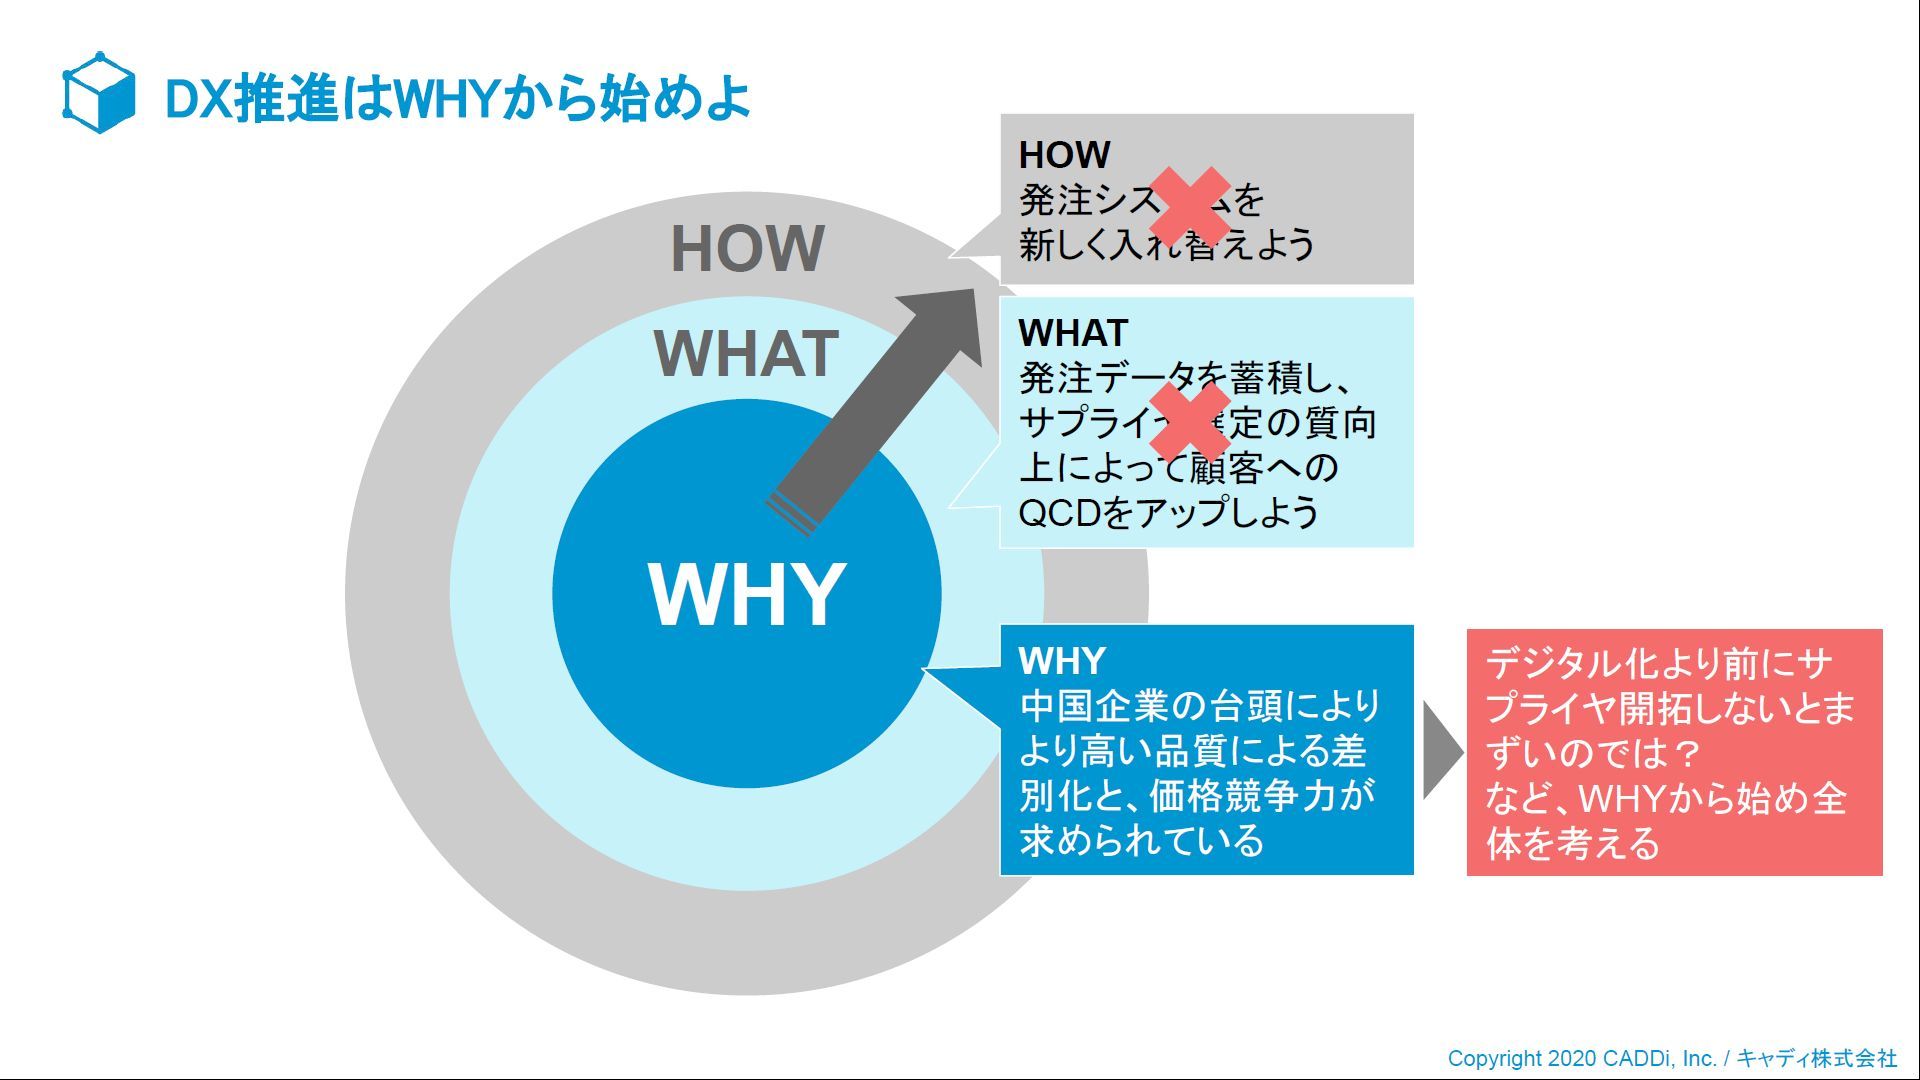 DXは「Why」から始めよ、購買調達プロセスの改革成否を握るポイント